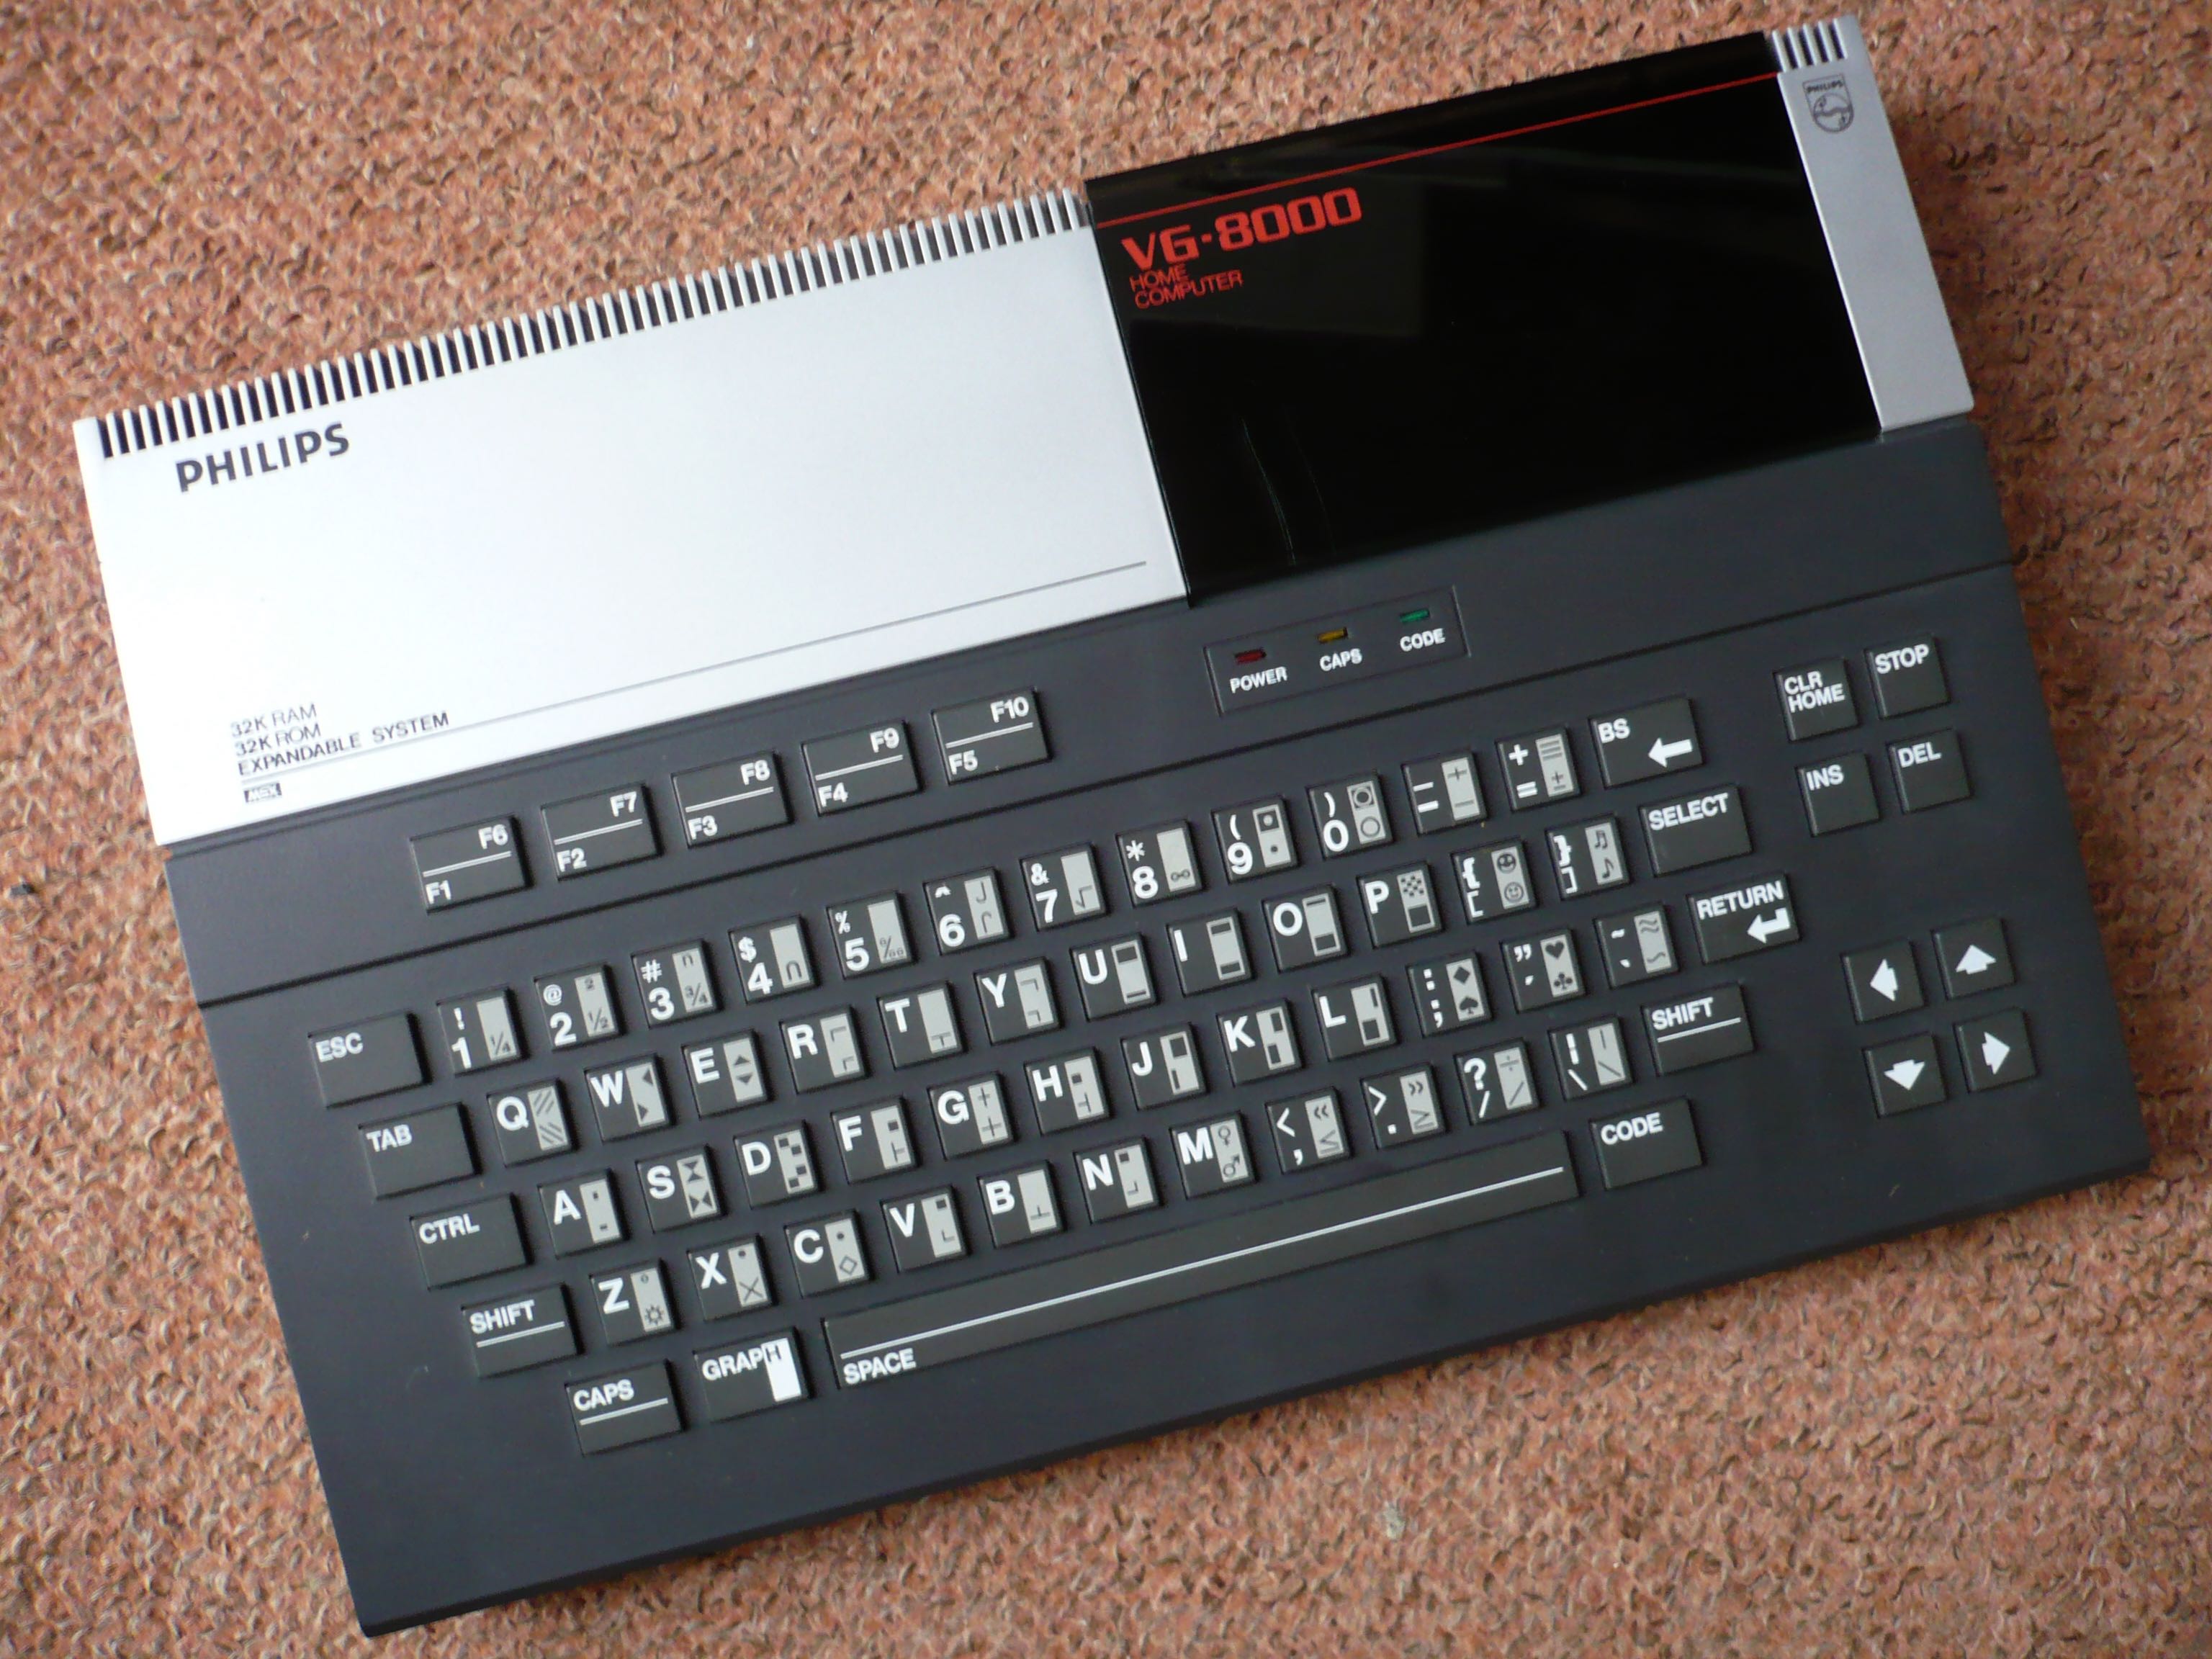 Philips VG-8000